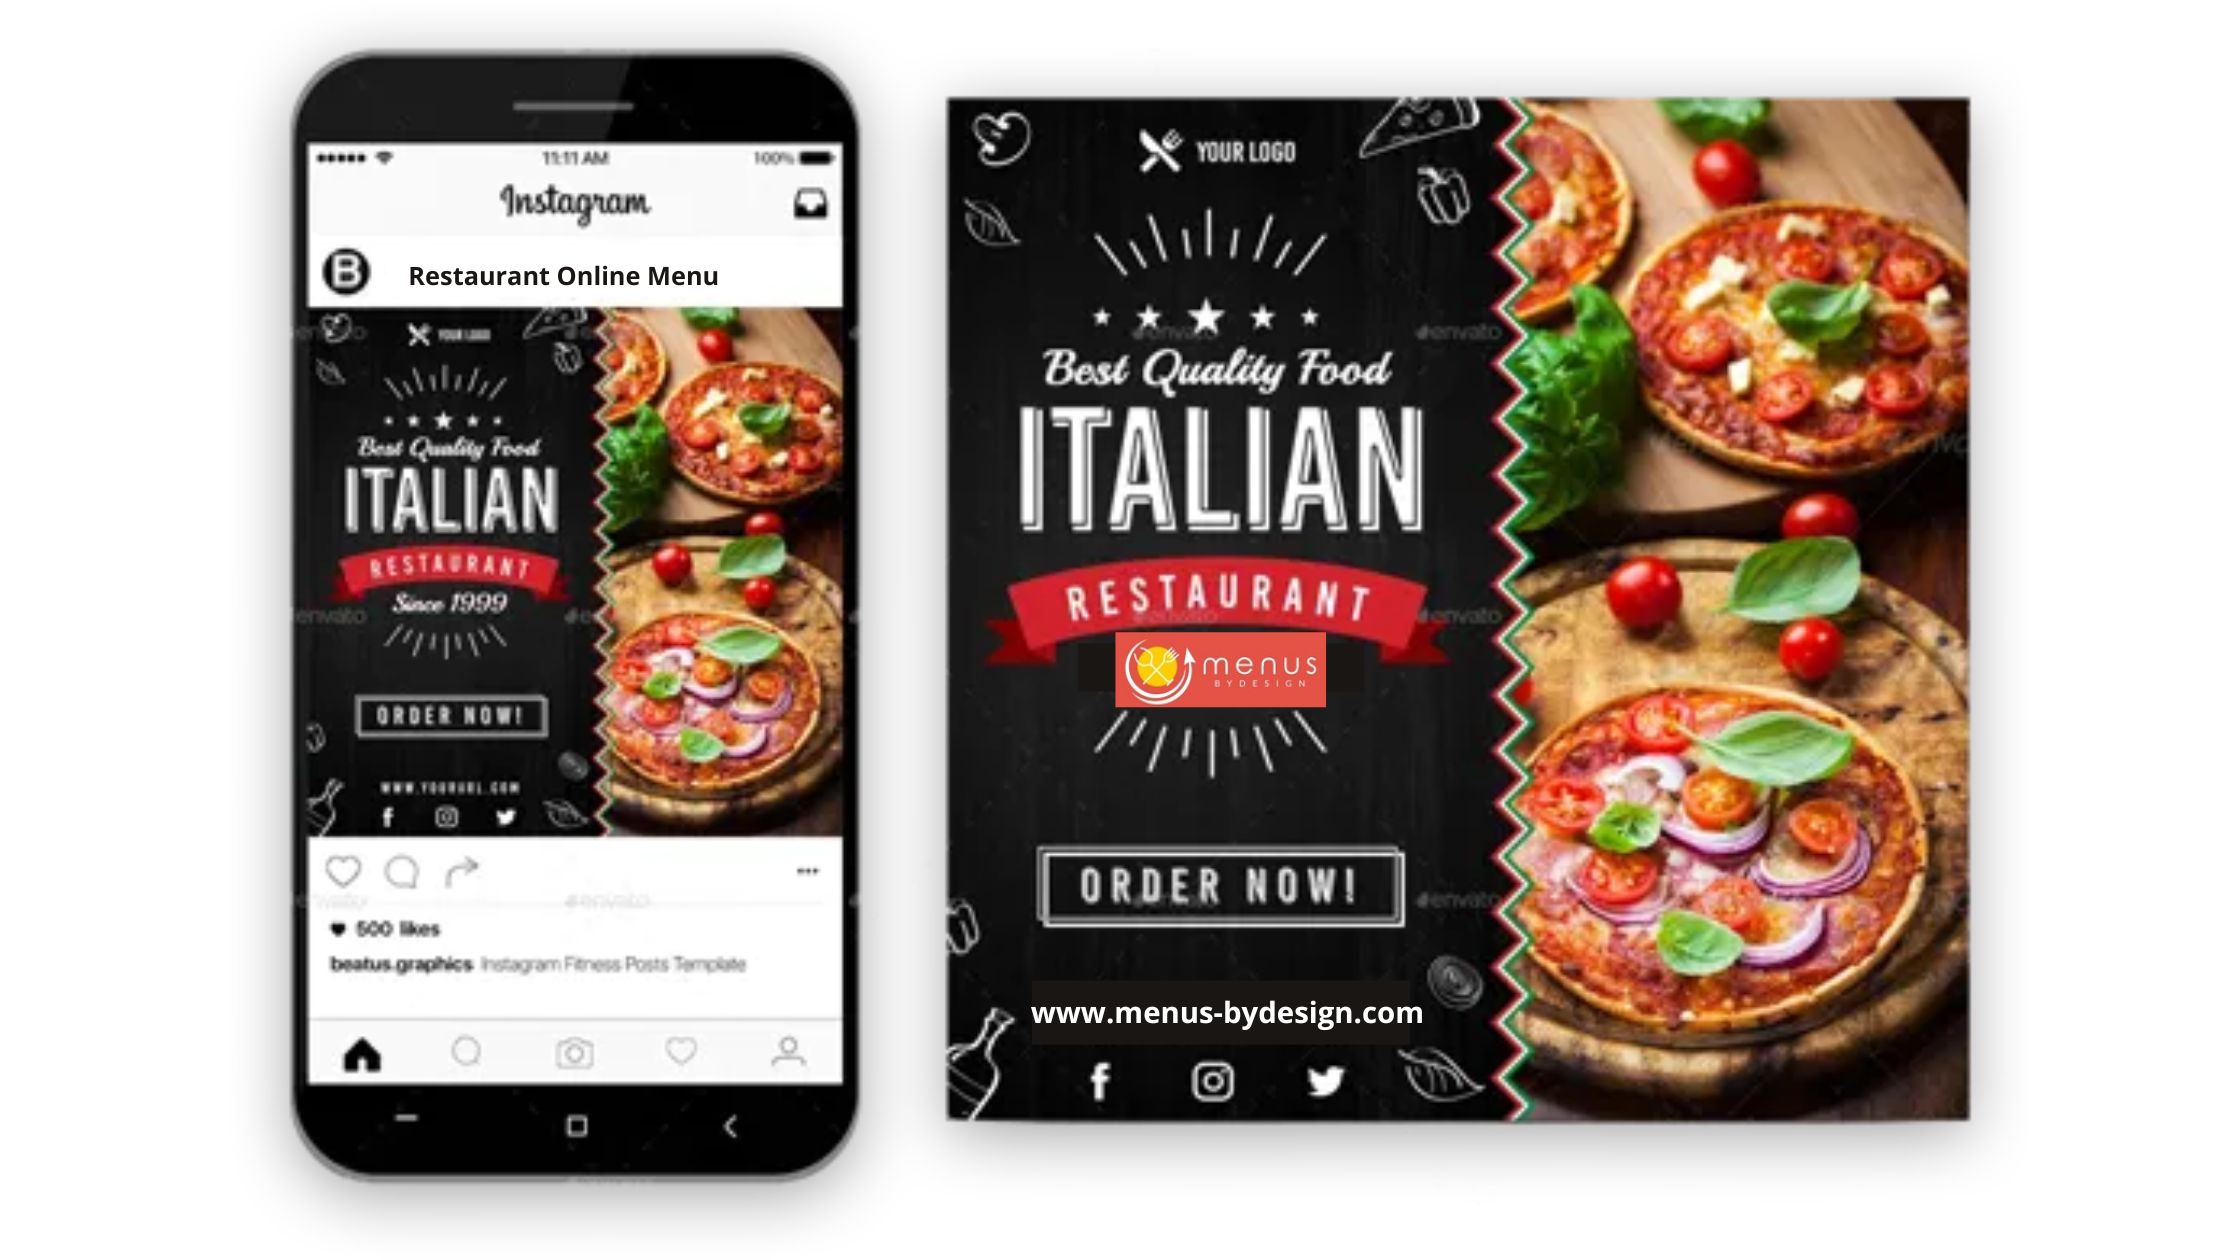 Why You Should Hire Restaurant Social Media Marketing Agency?